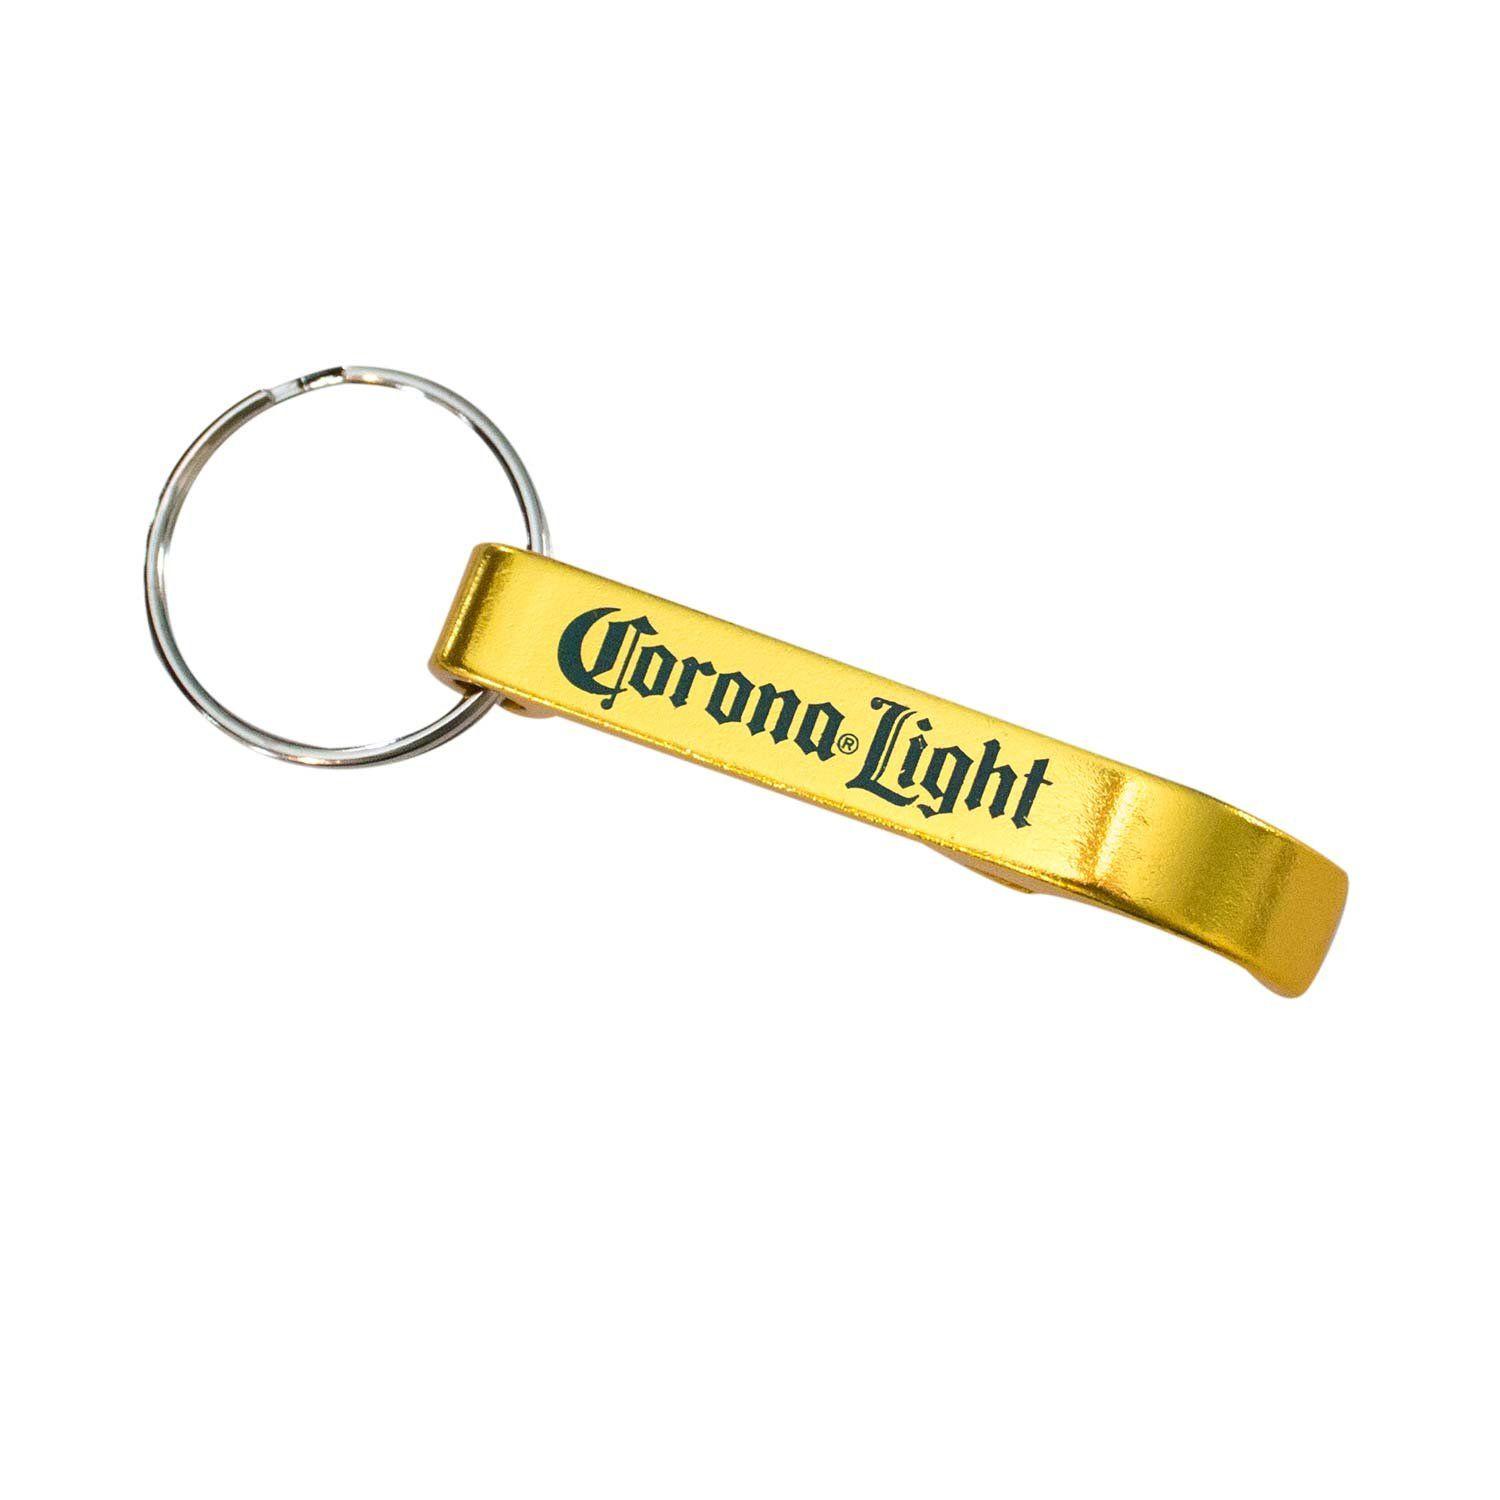 Corona Light Logo - Amazon.com: Corona Light Beverage Wrench Keychain Opener: Kitchen ...